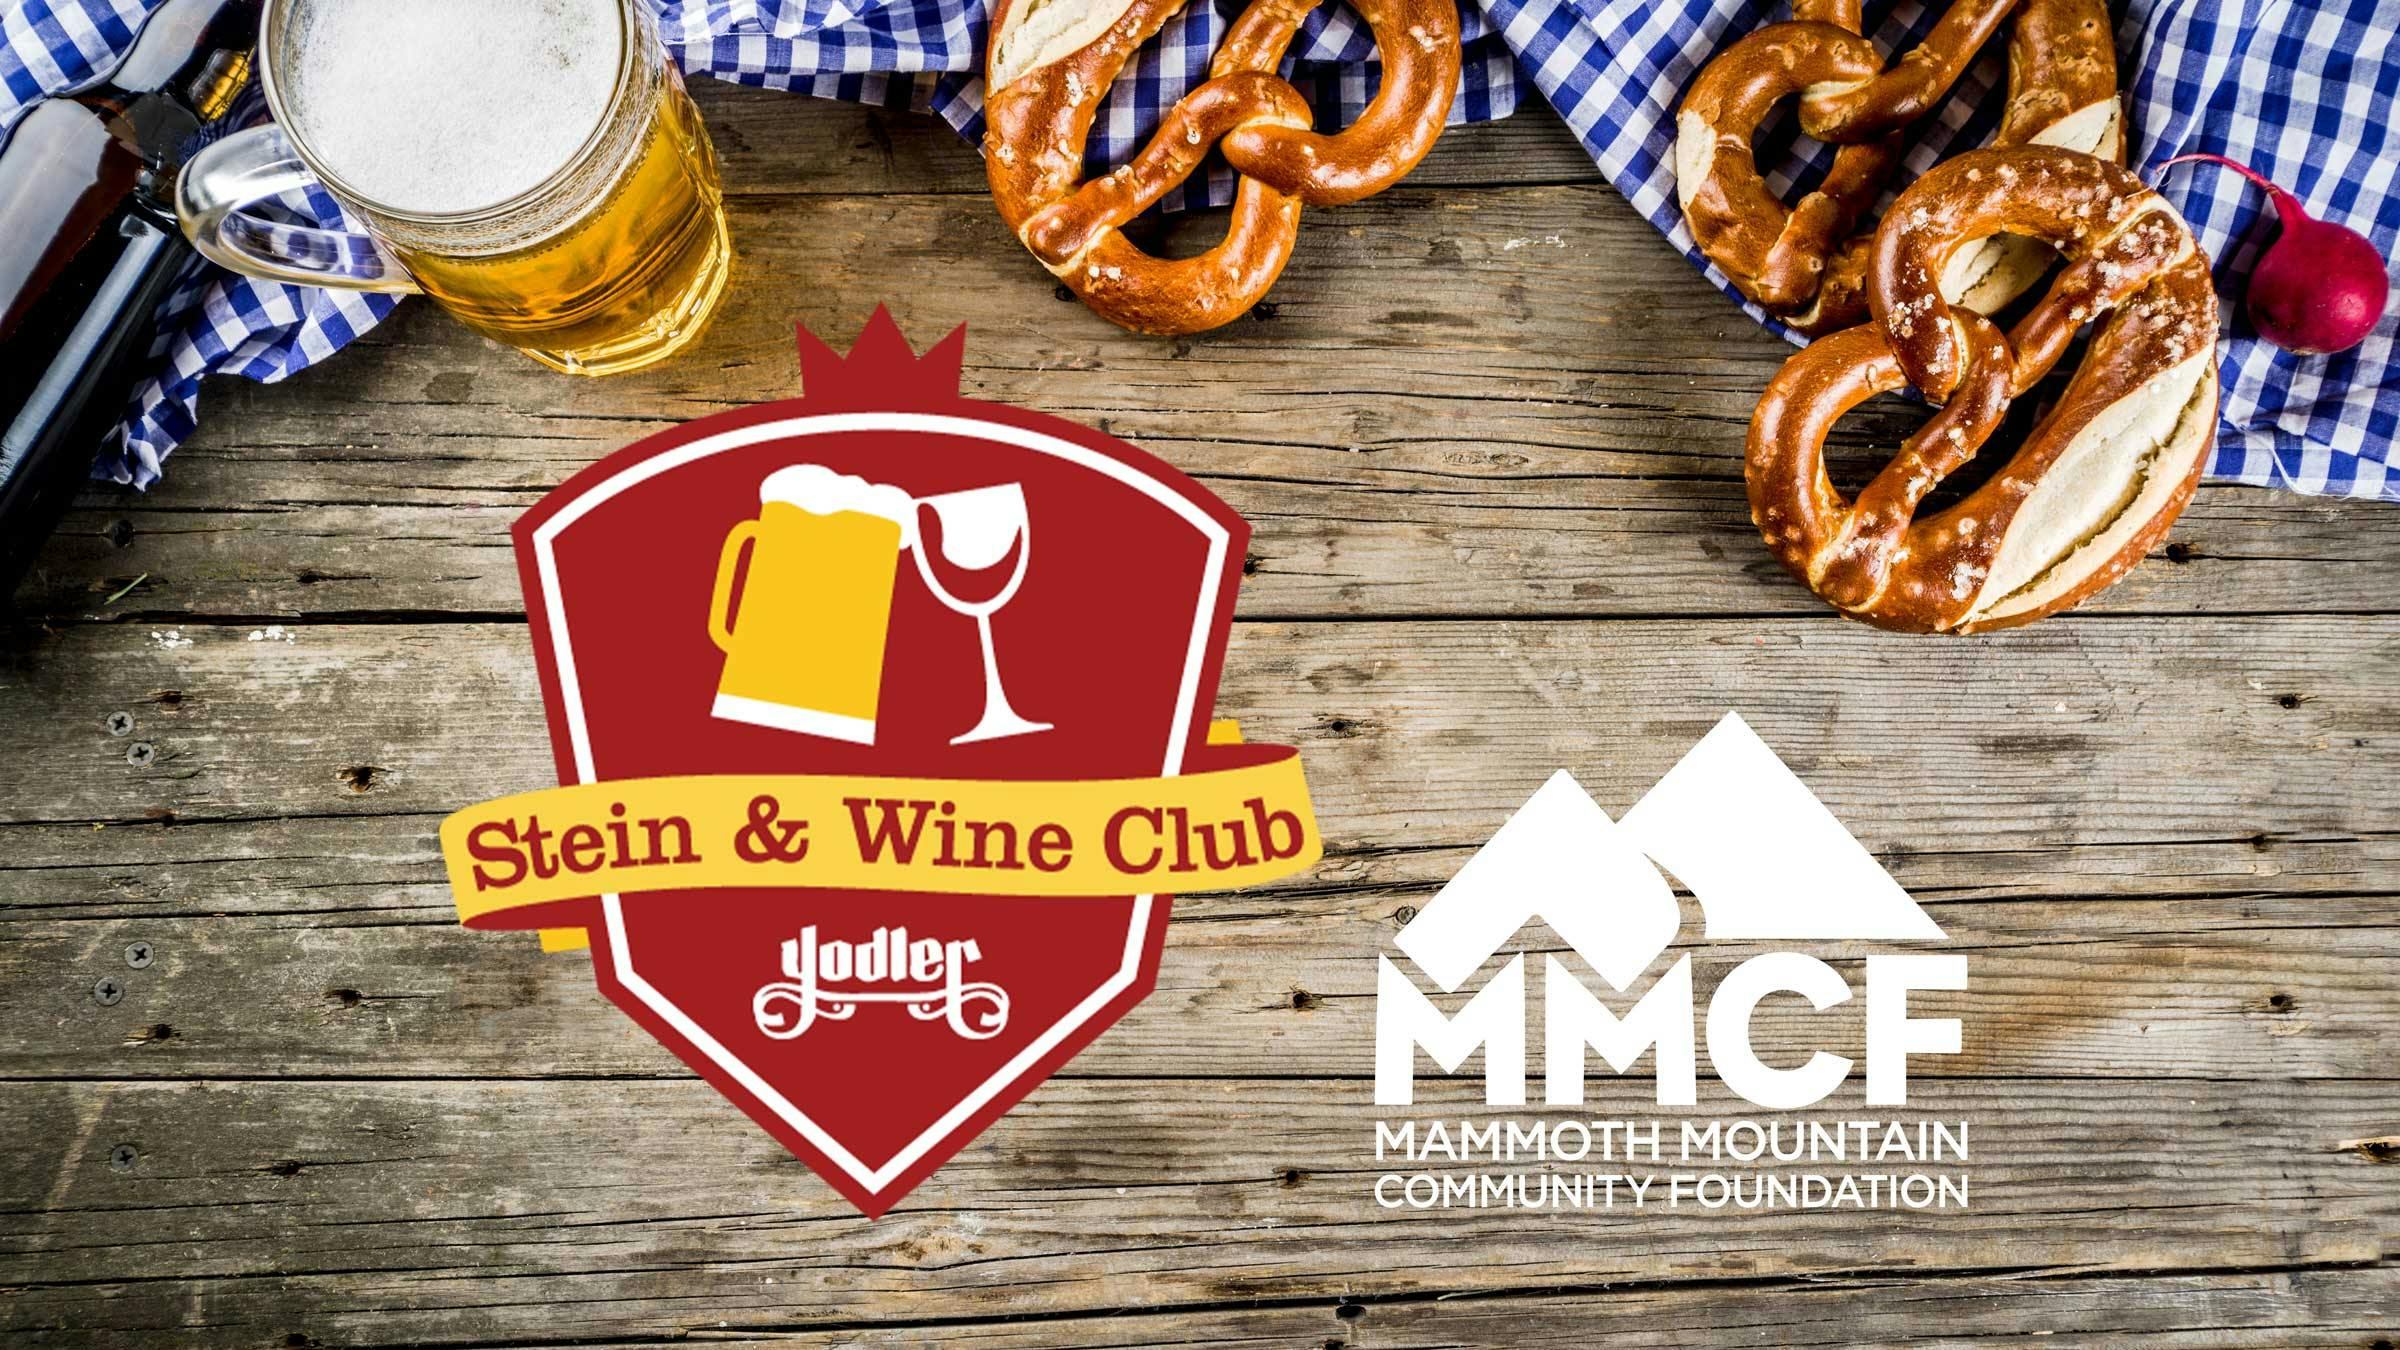 Stein & Wine Club Logo on Bavarian themed background